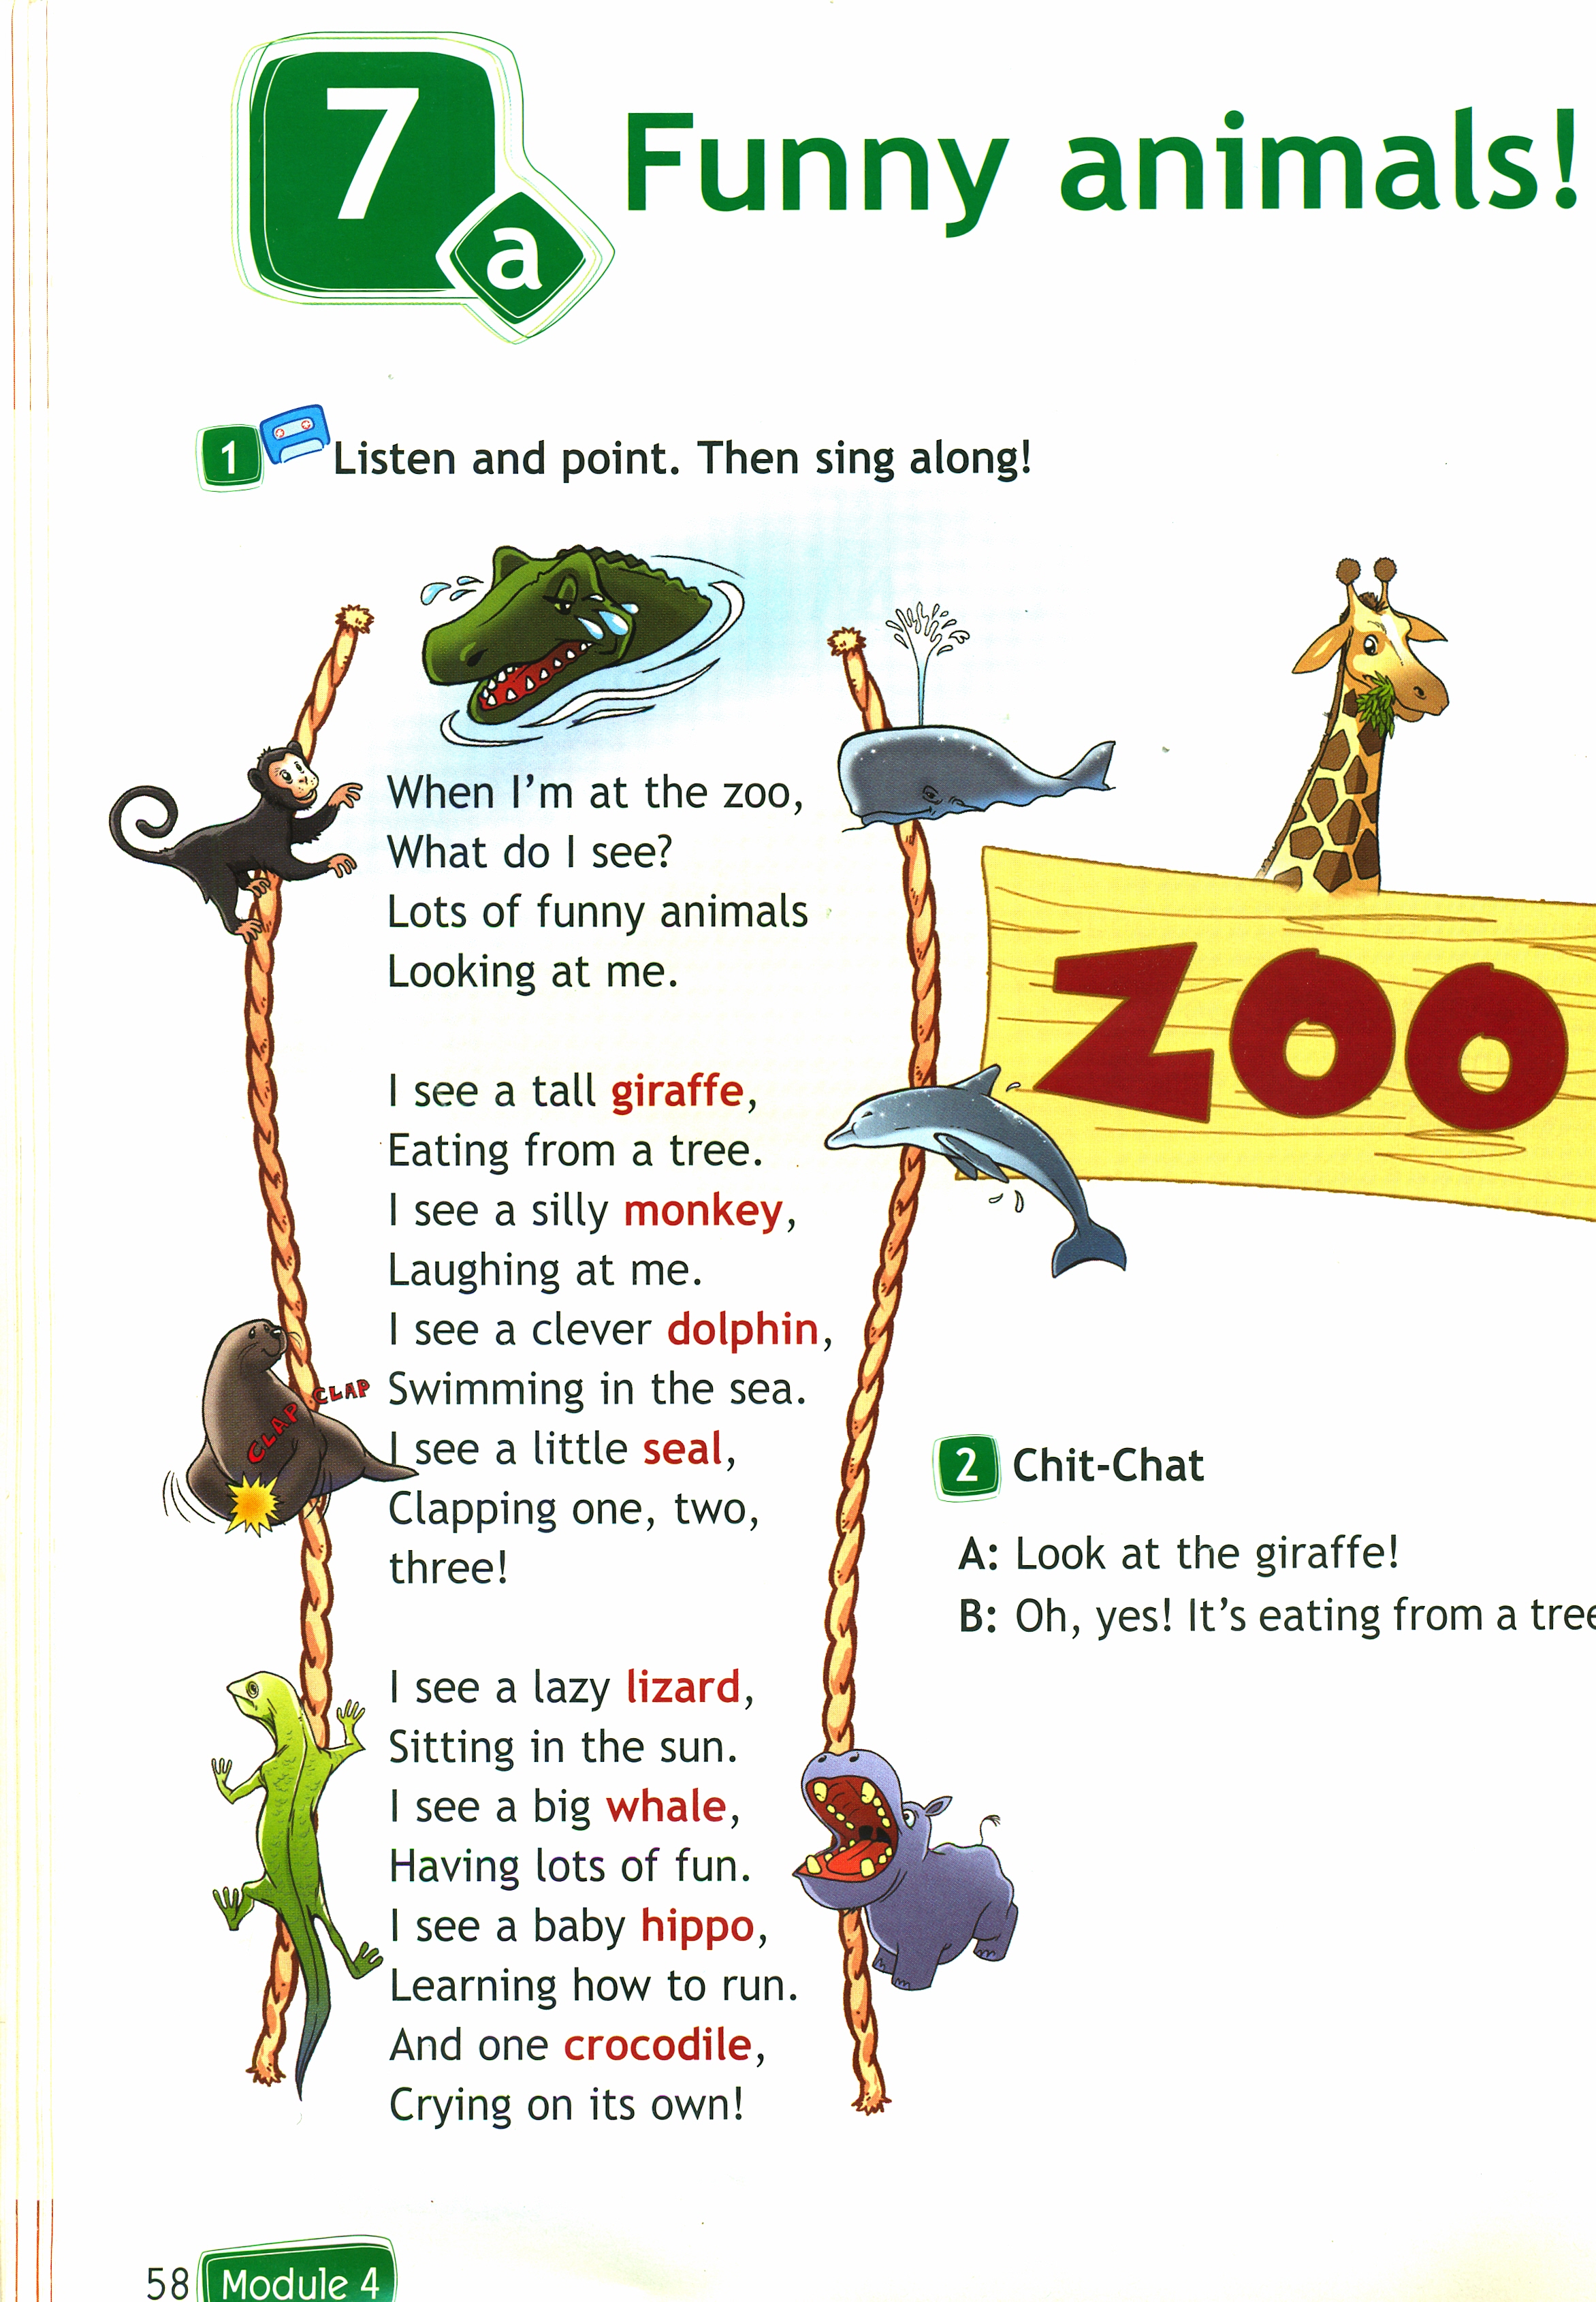 We can do a lot. Английский 4 класс учебник Spotlight. Стишок про зоопарк на английском. English Spotlight 4 класс учебник. Английский язык 4 класс учебник стих.